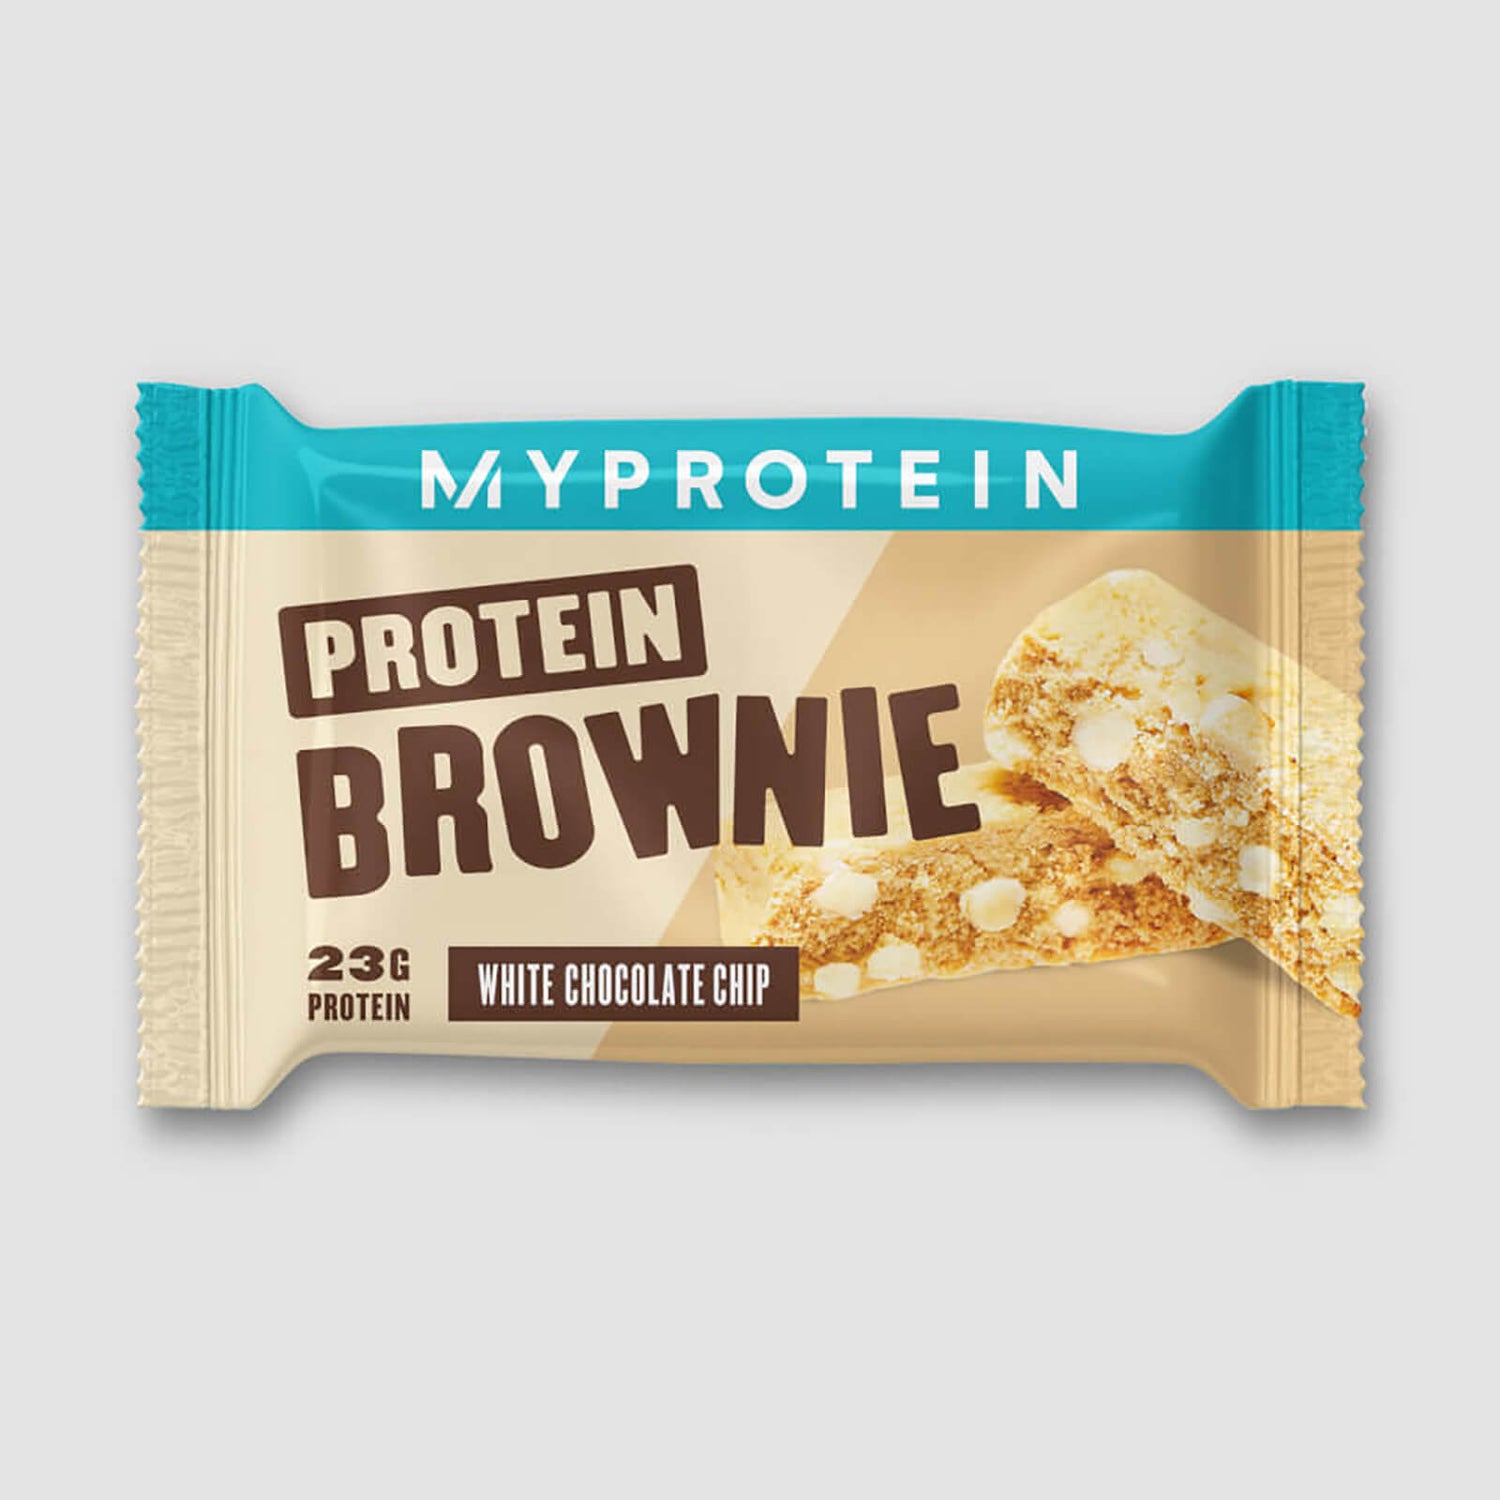 Protein Brownie - Sample - 75g - White Chocolate